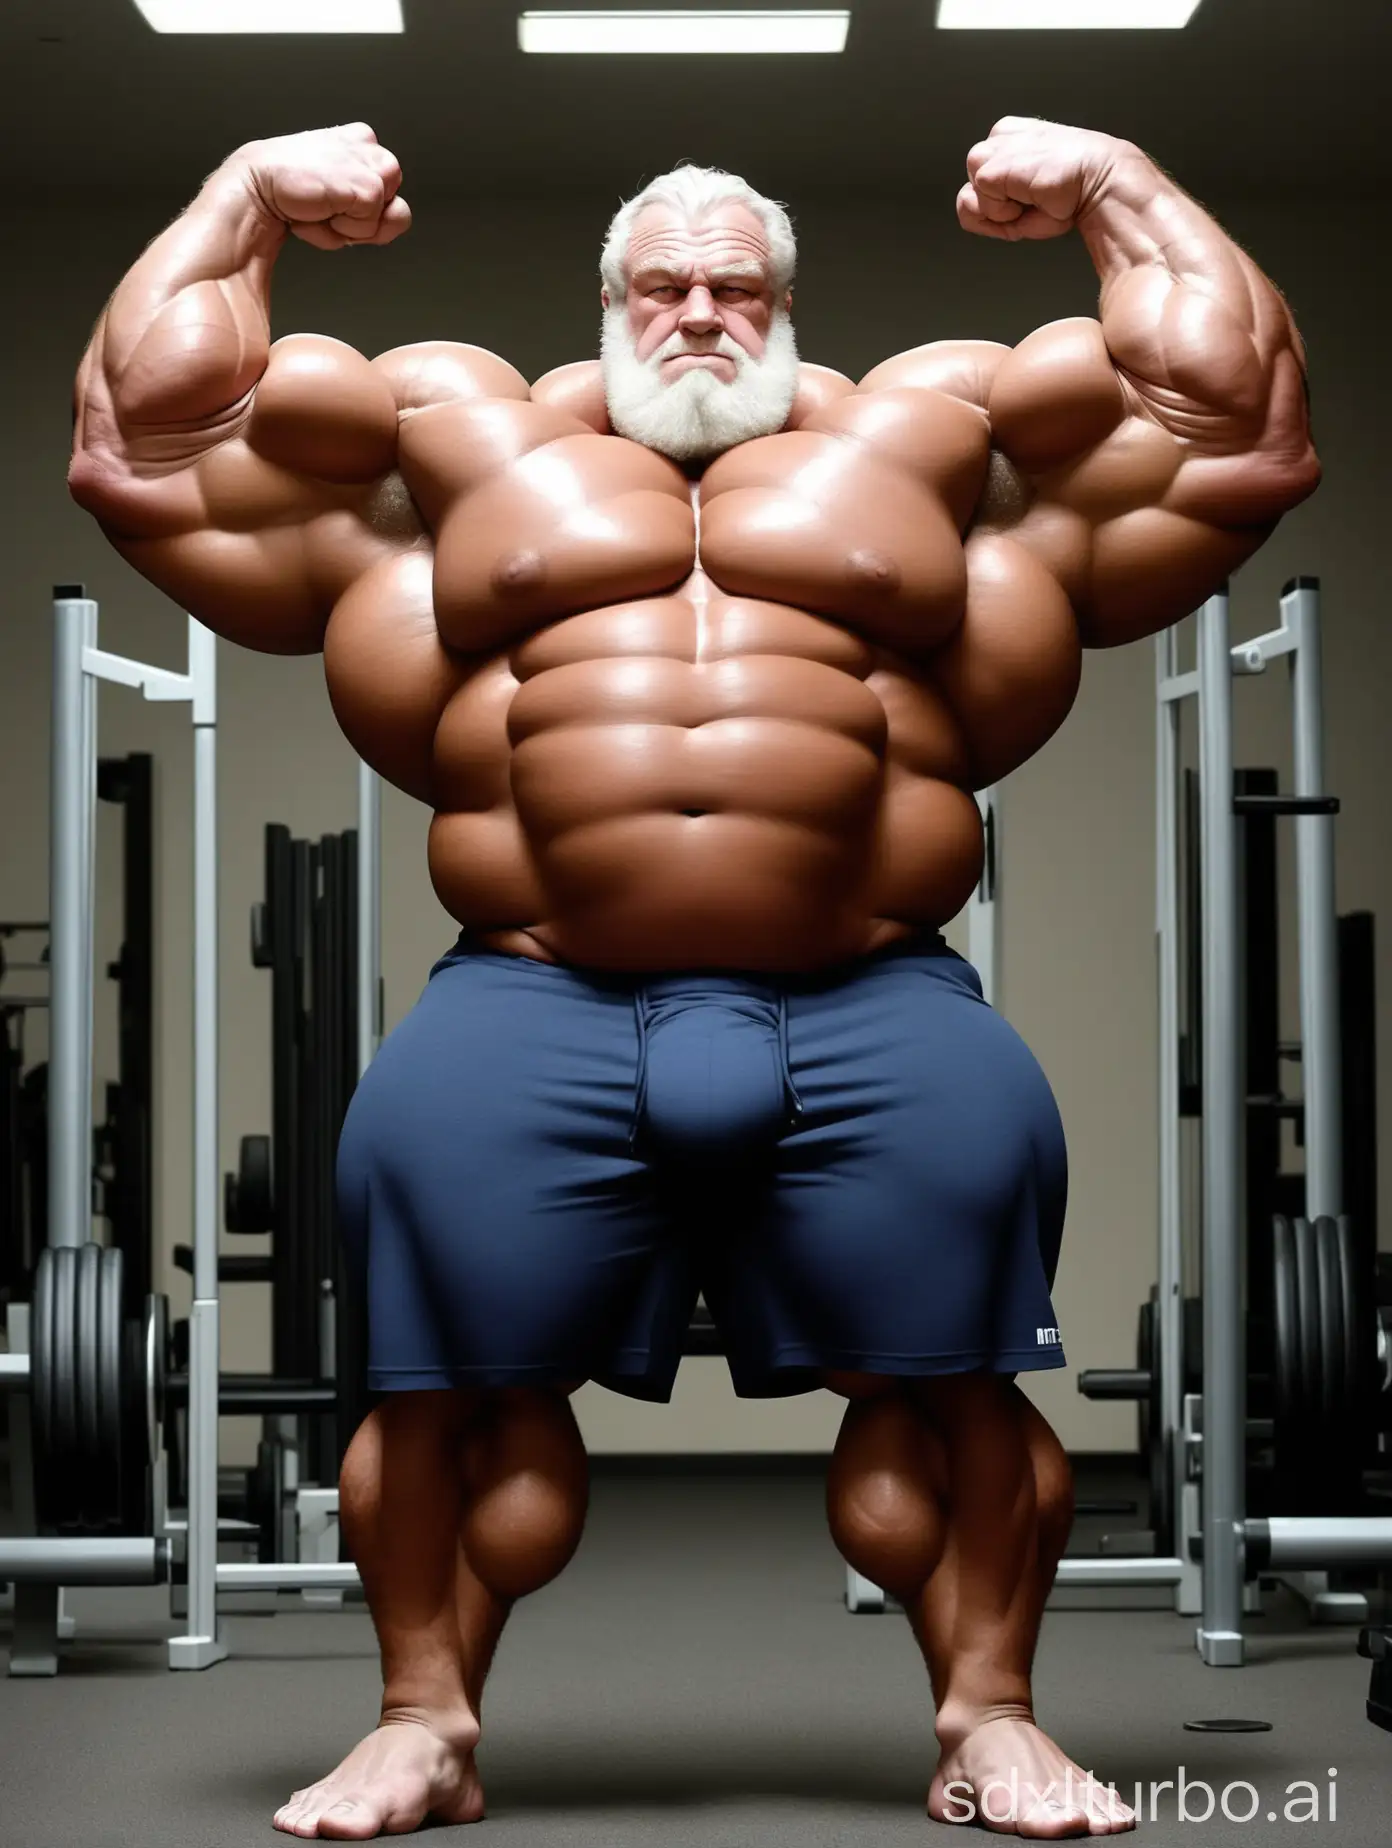 Huge-Muscle-Man-Flexing-in-Underwear-Massive-Bodybuilder-Showing-Off-Strength